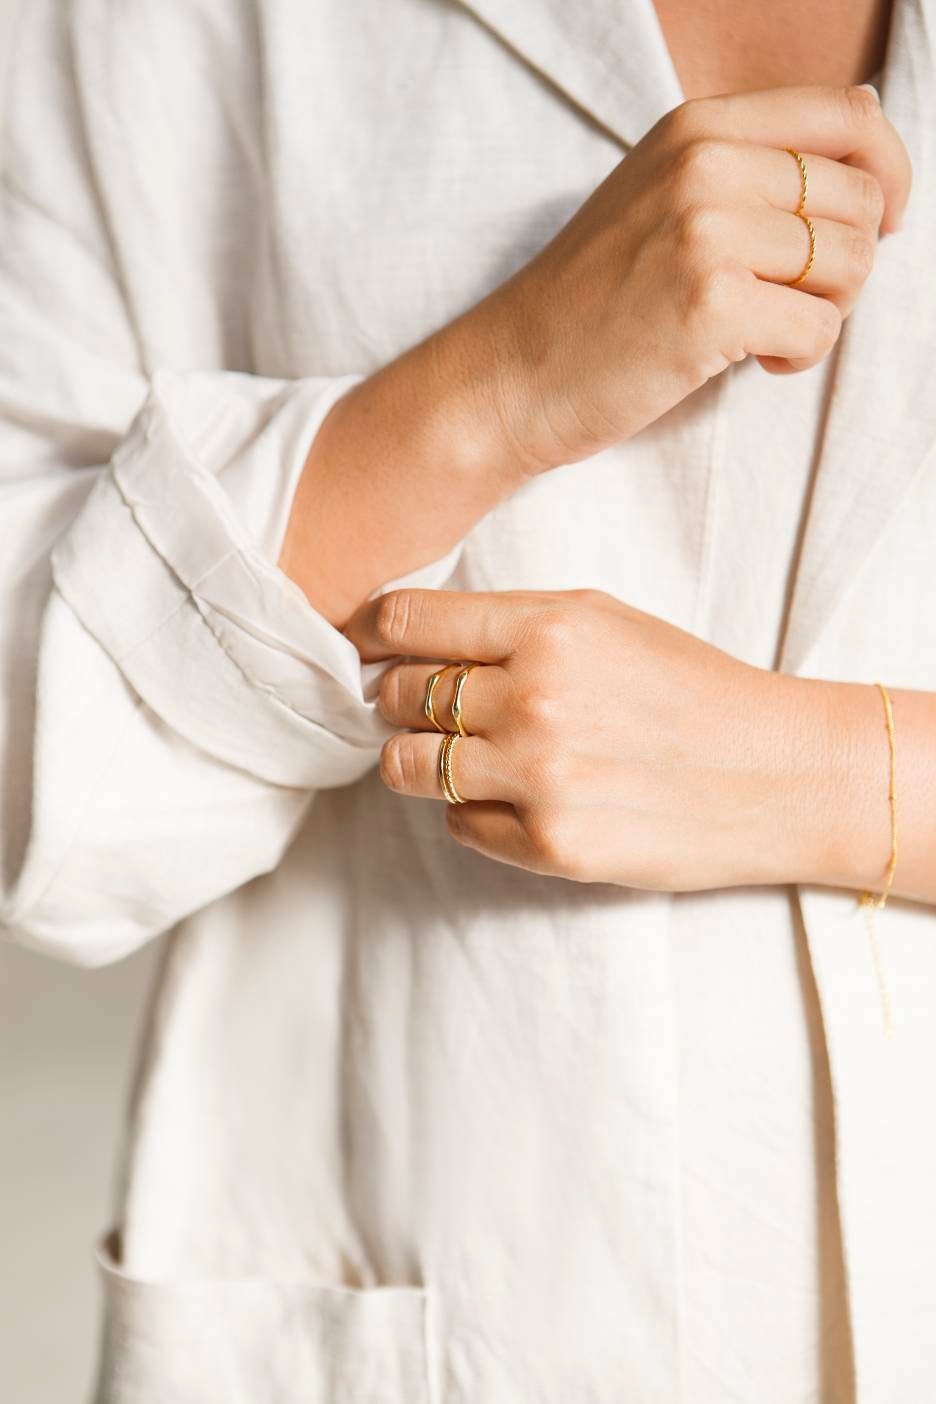 Zartes Armband-filigran-Kugelarmband-Stapelarmband-puristisch-schlicht-minimalistisch-925er Silber-vergoldet-Satellitenarmband-Kugelarmband